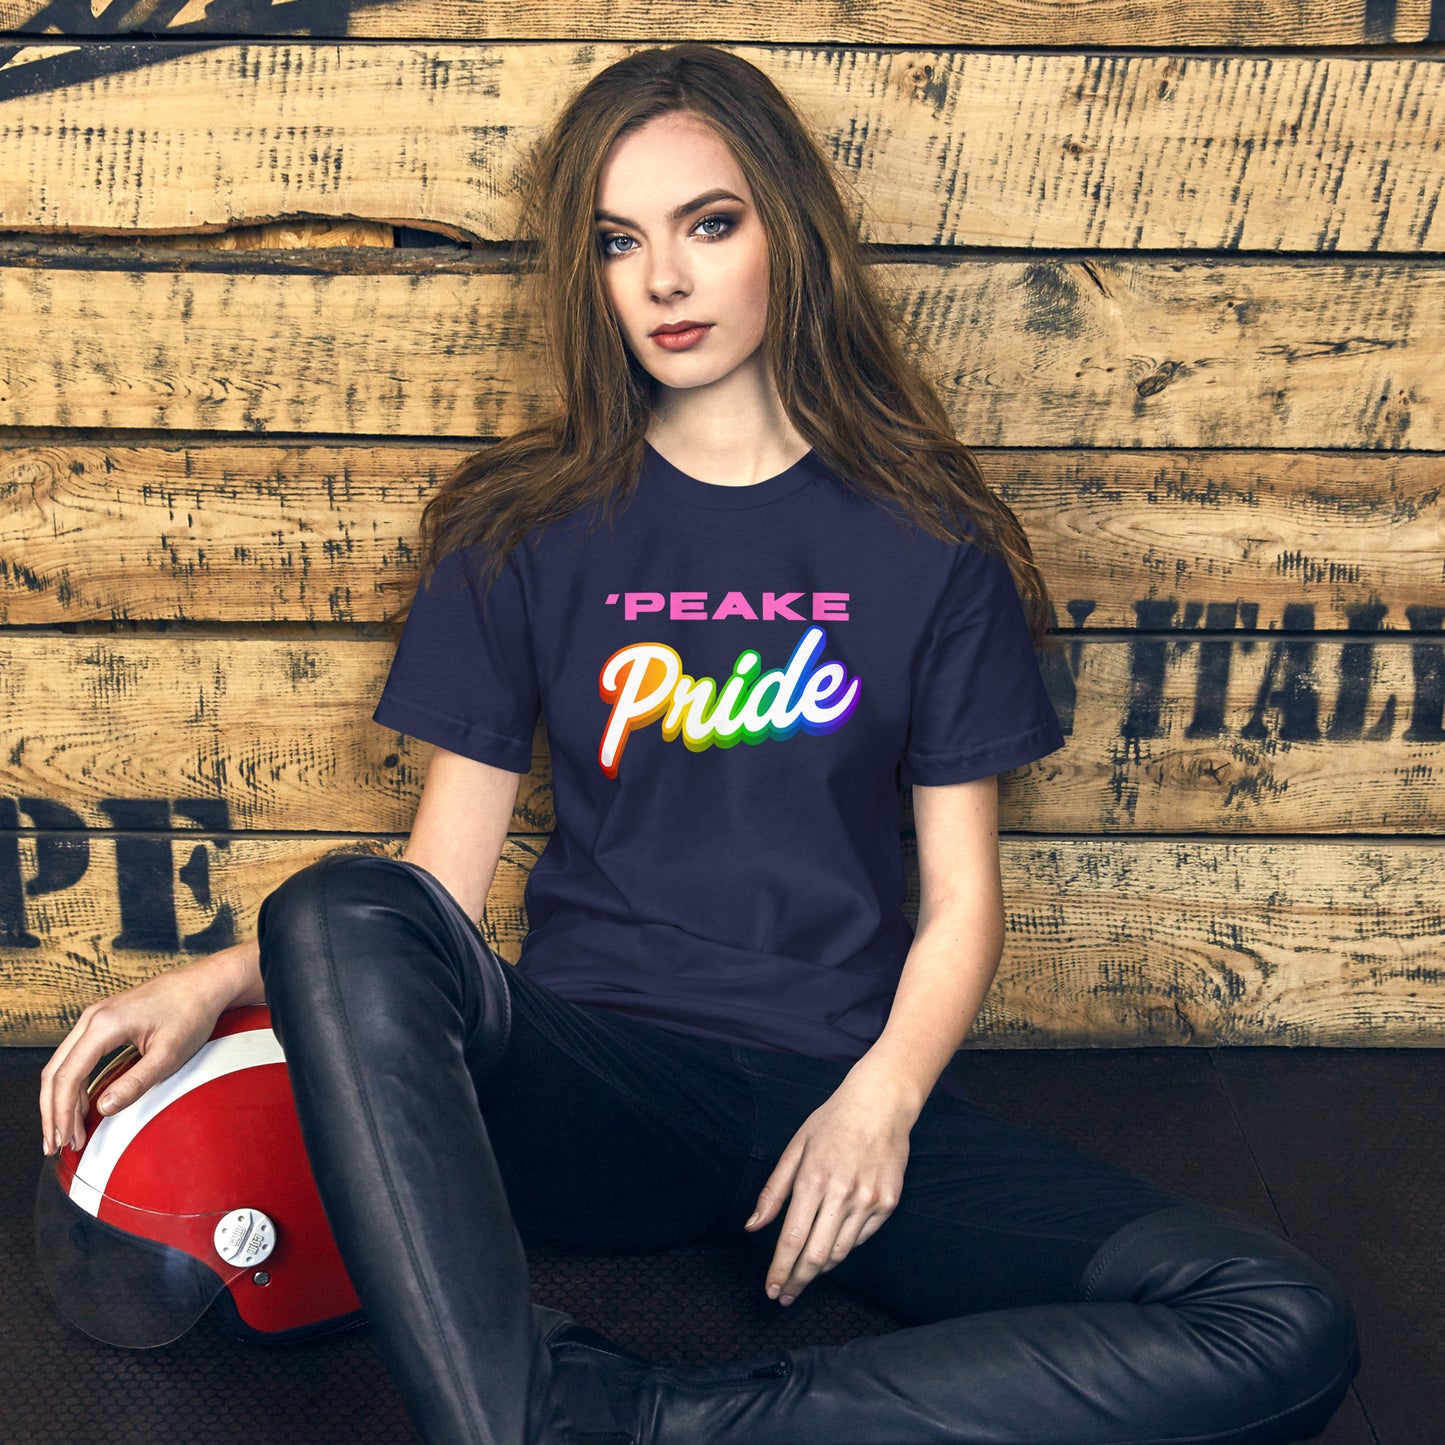 "'Peake Pride" unisex t-shirt